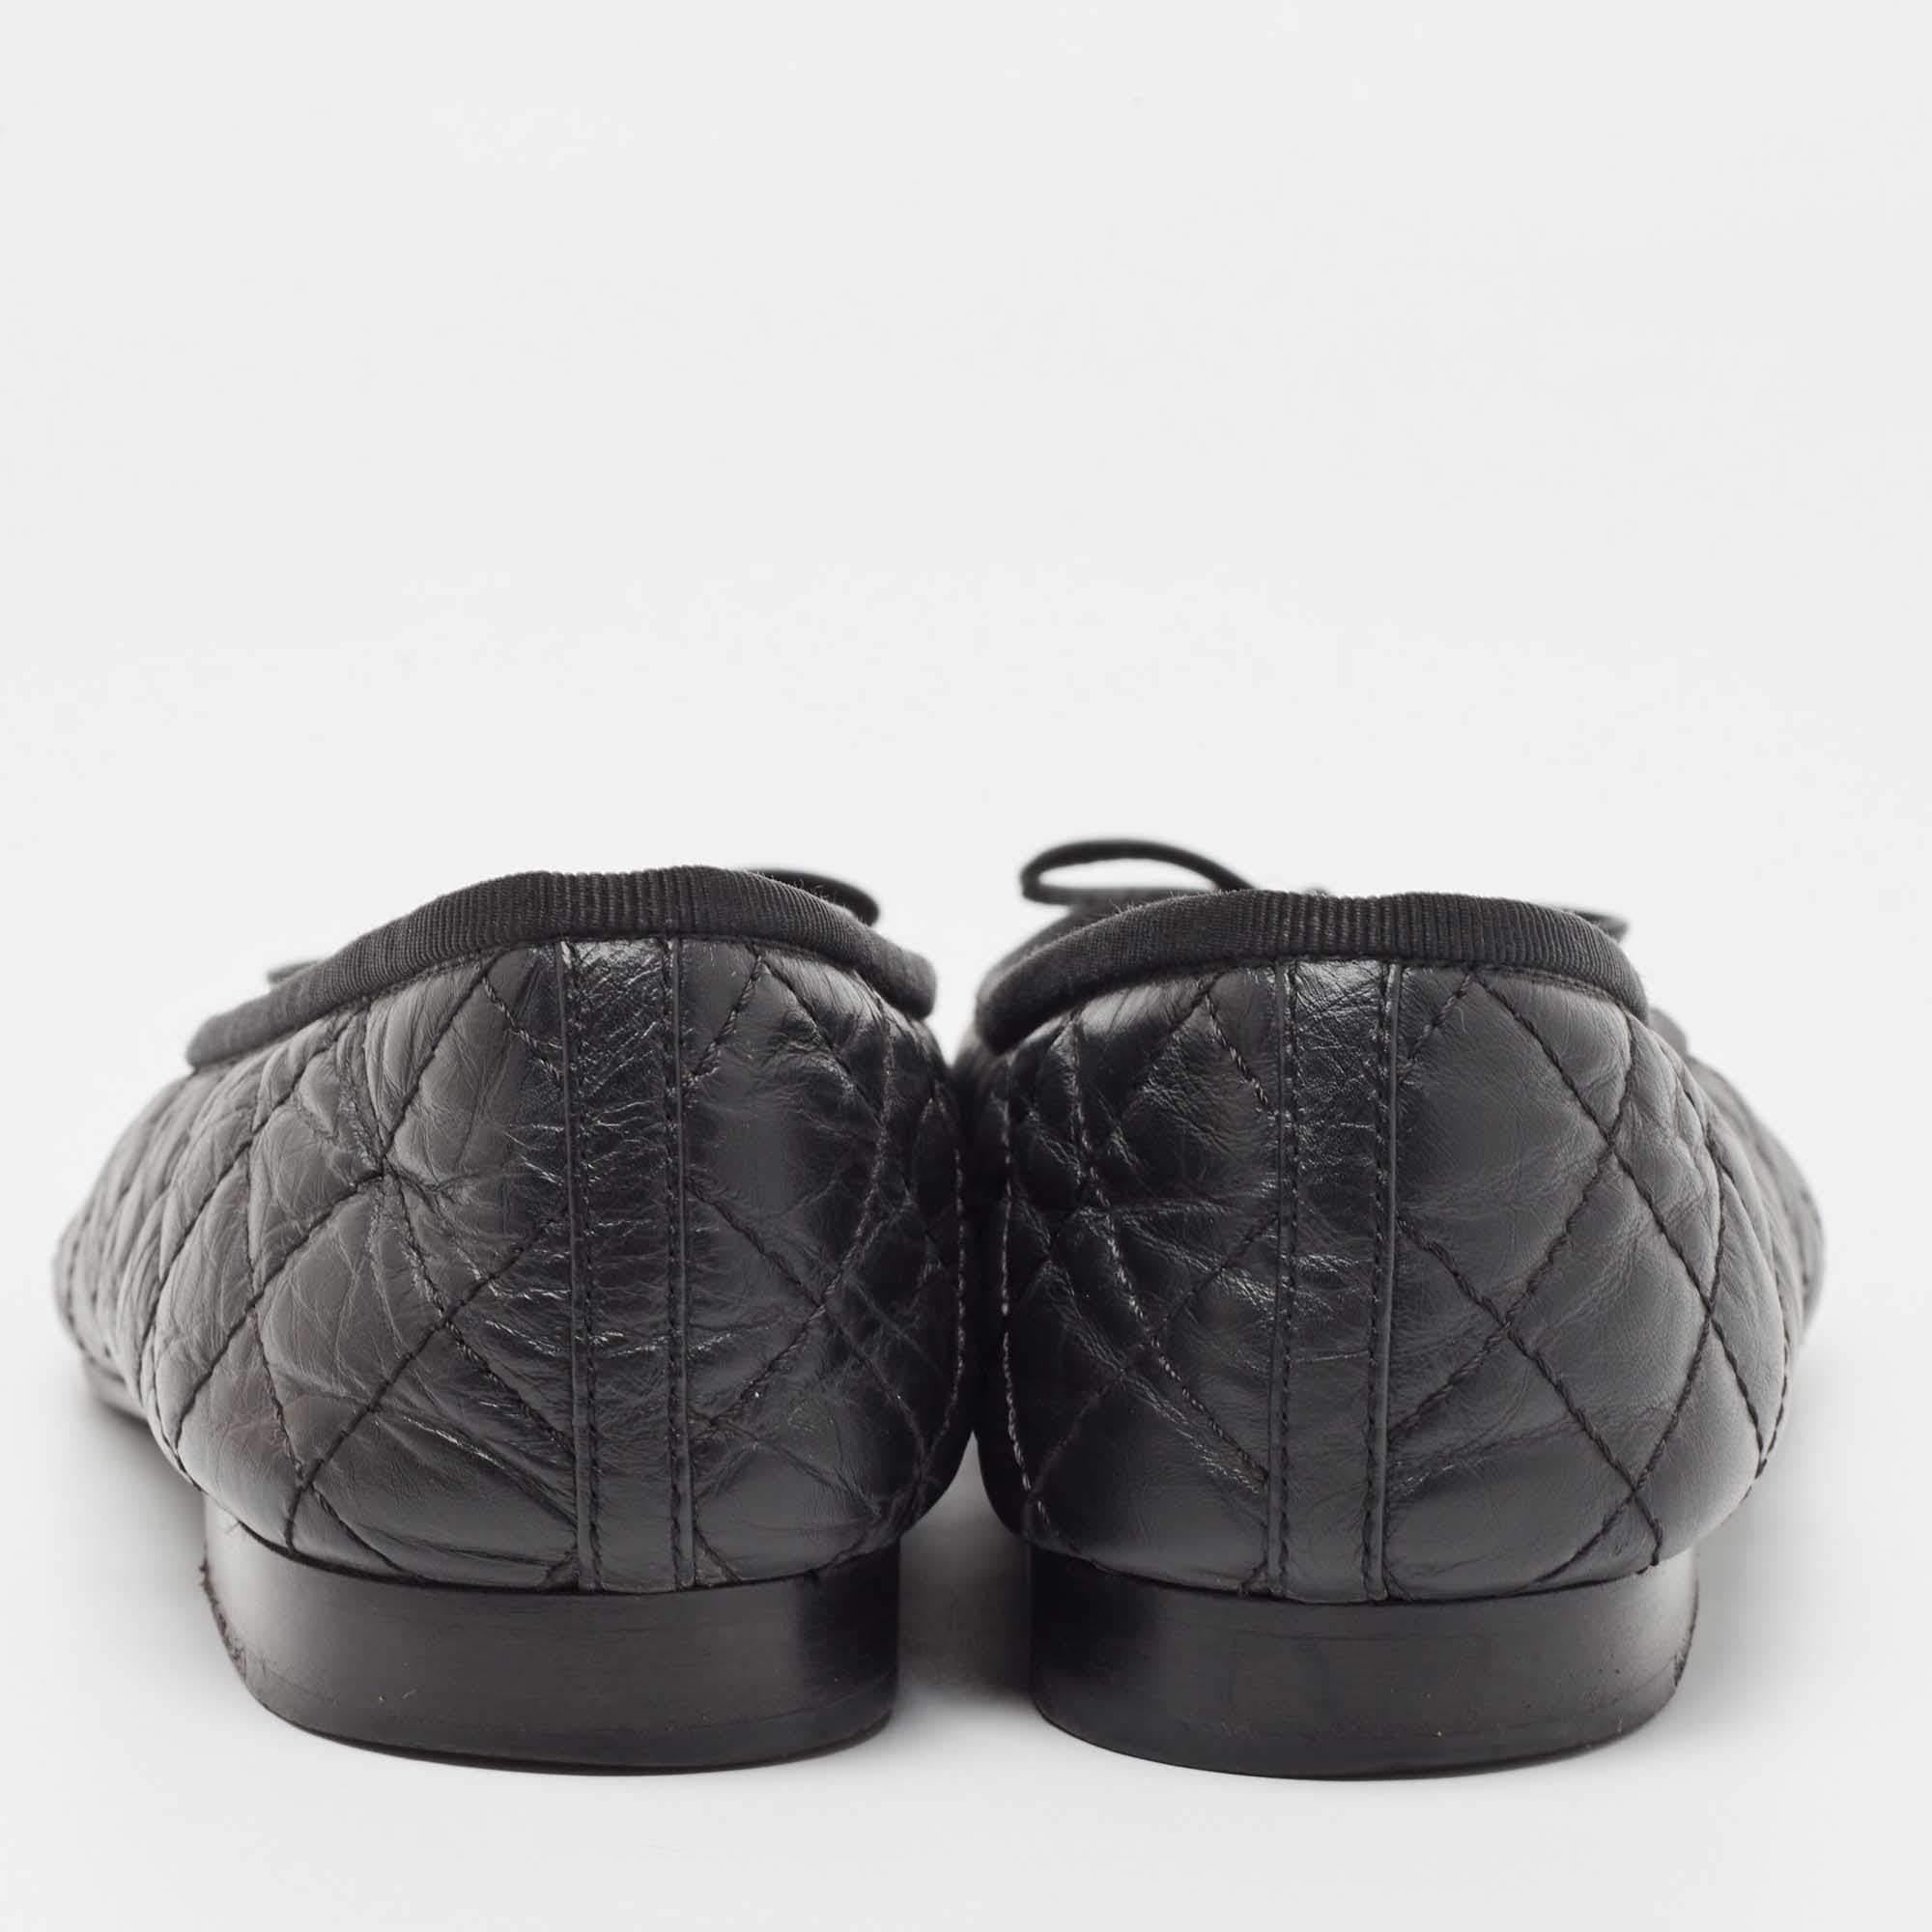 Chanel Black Leather CC Ballet Flats Size 39 1